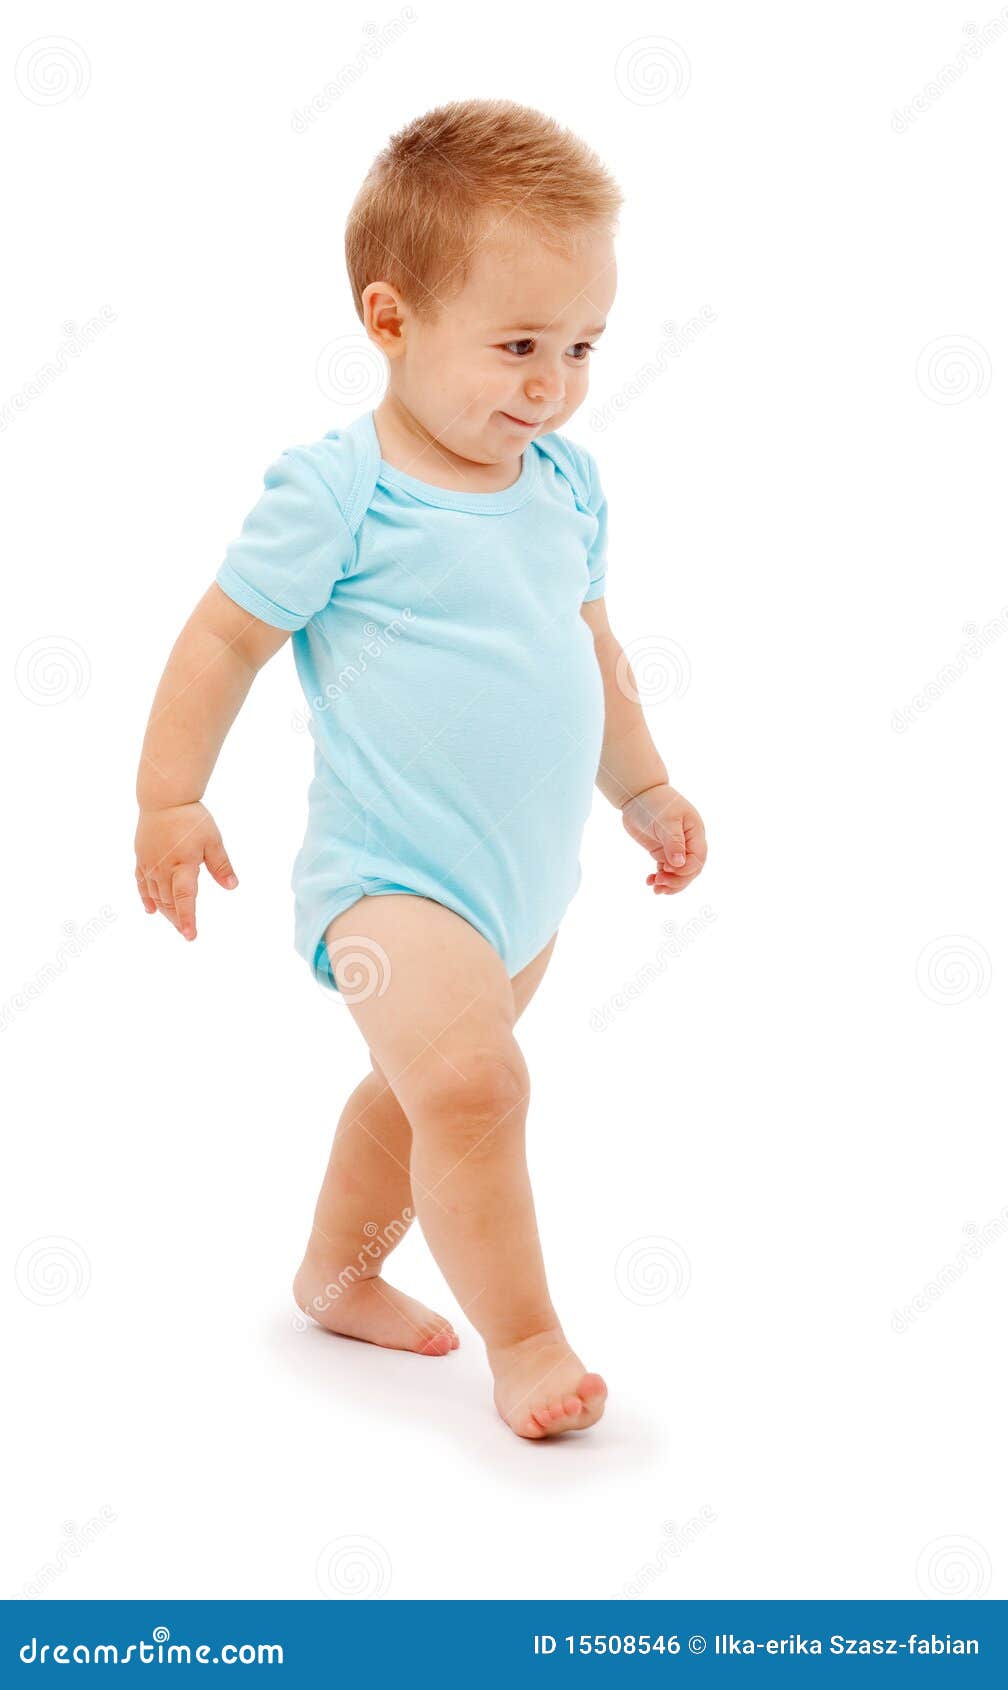 when baby boy start walking